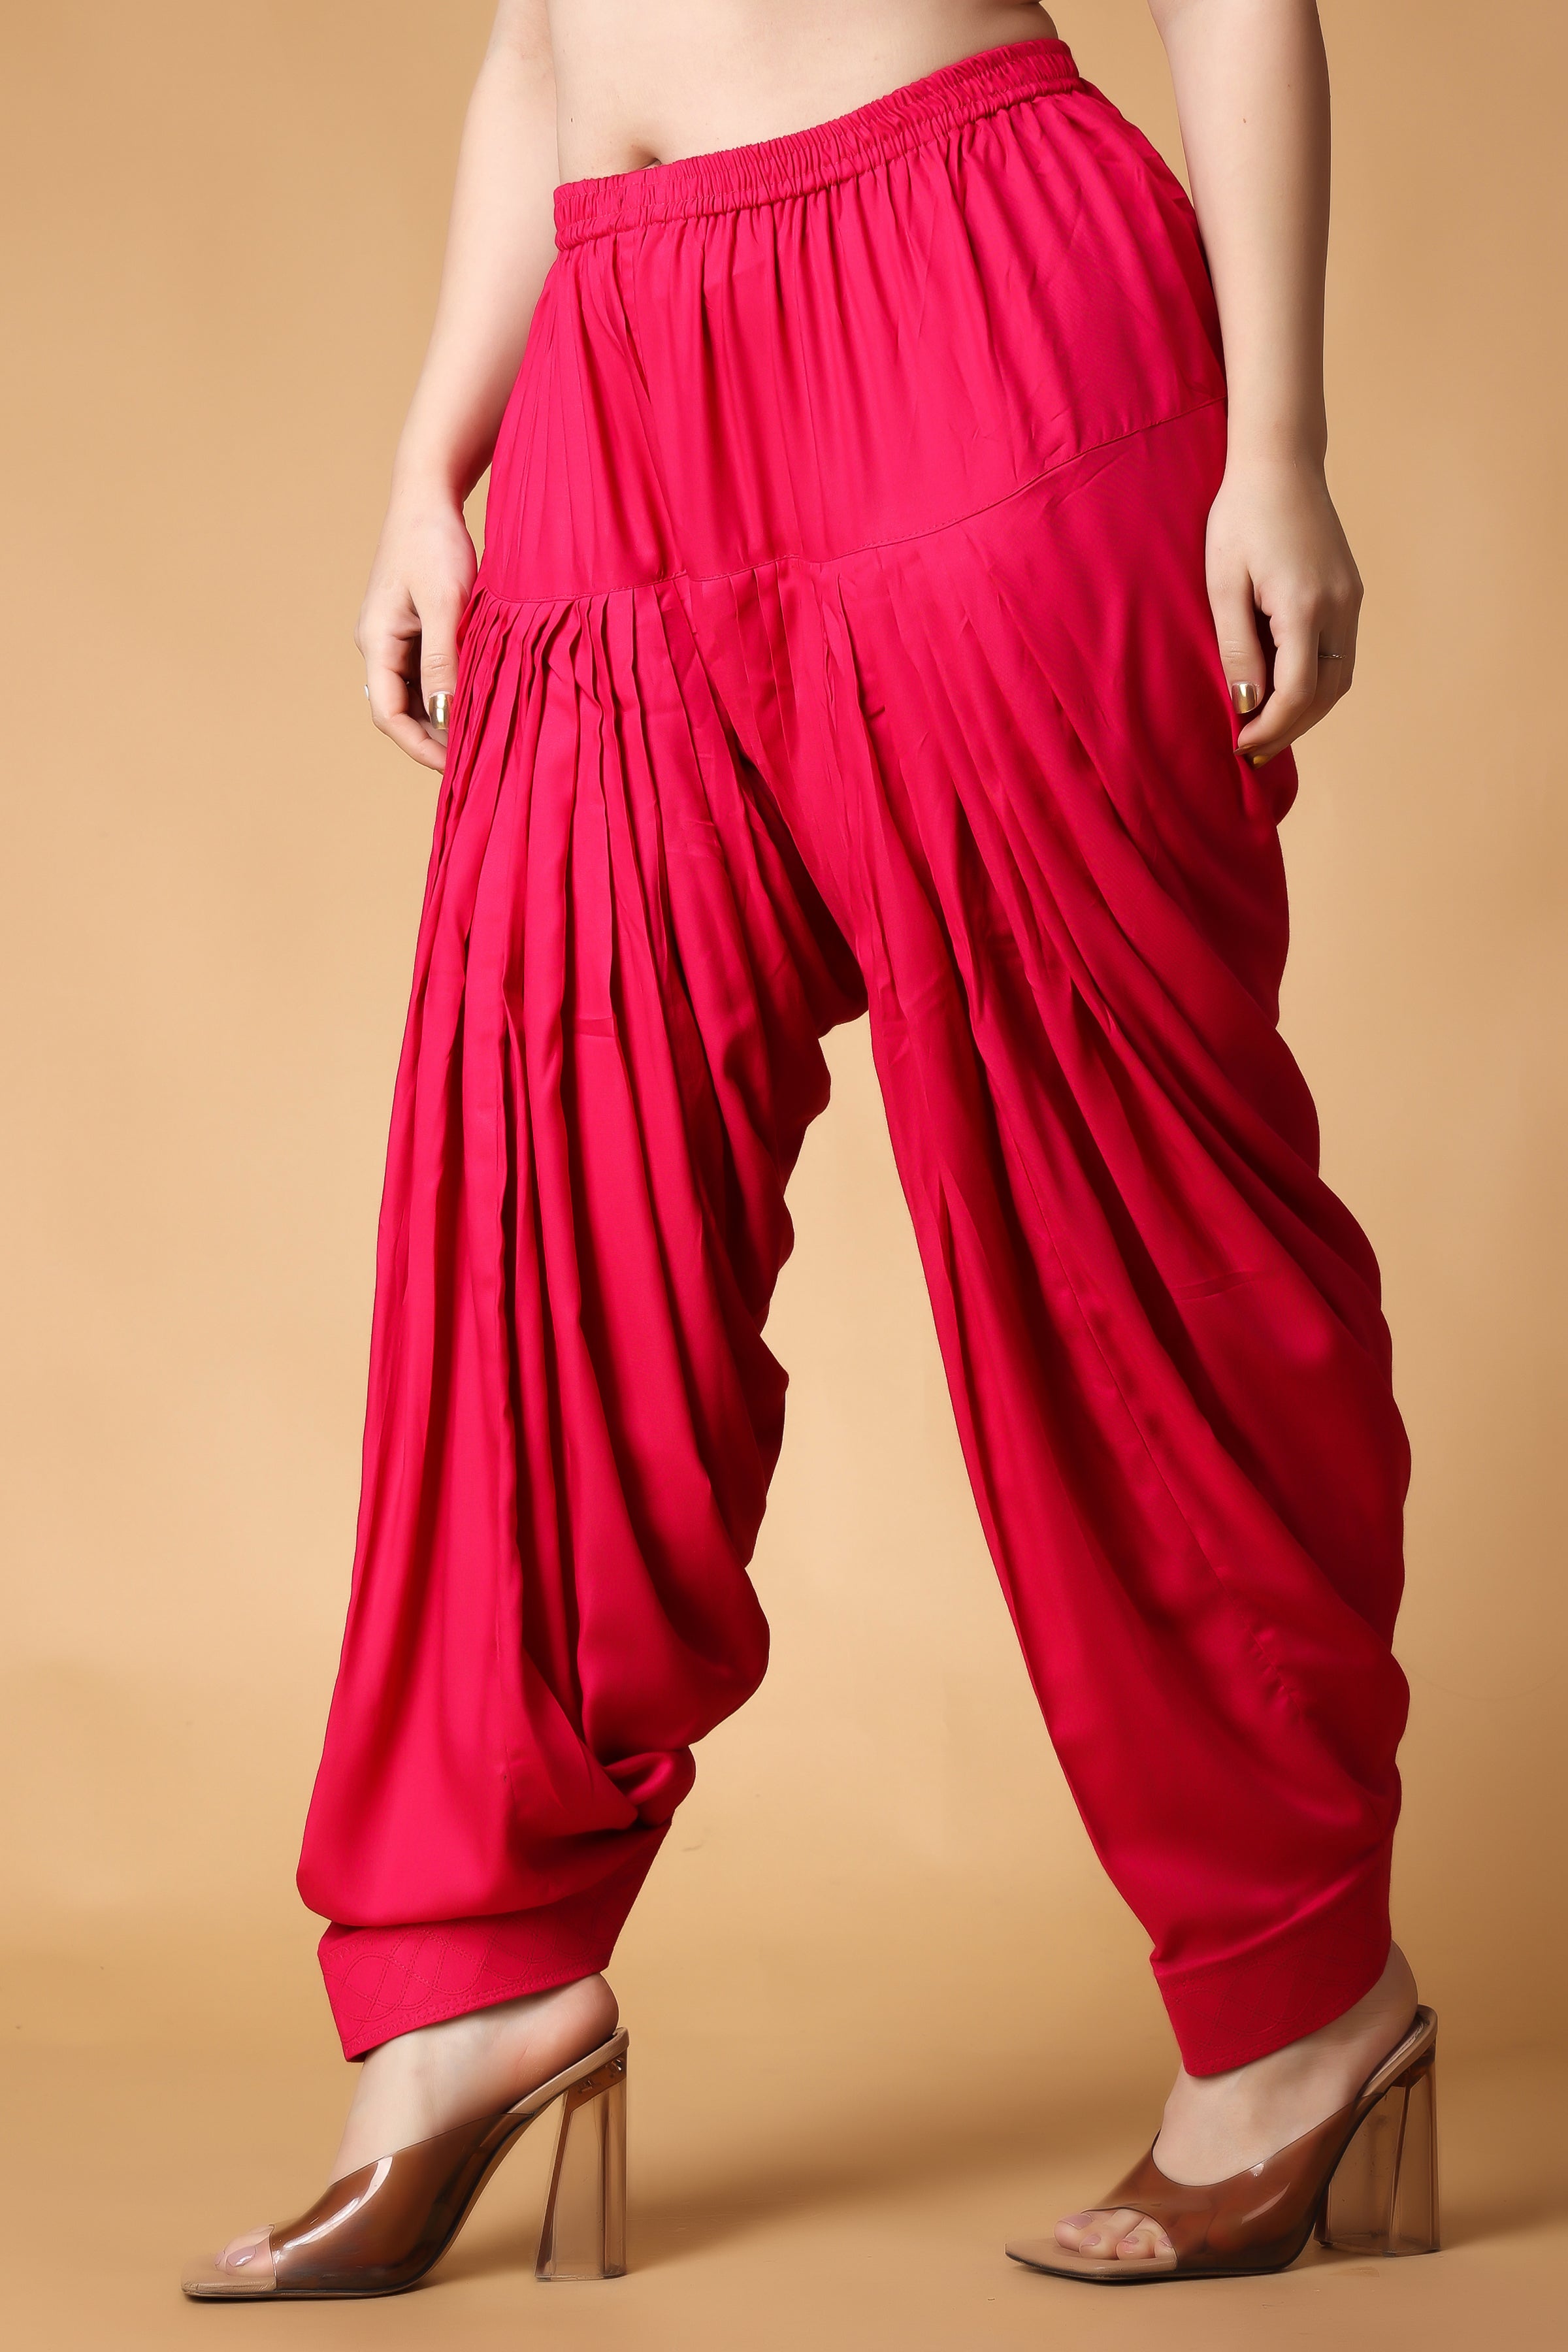 Buy Punjabi Suits Online, Latest Punjabi Patiala Suit, Salwar Kameez  Shopping